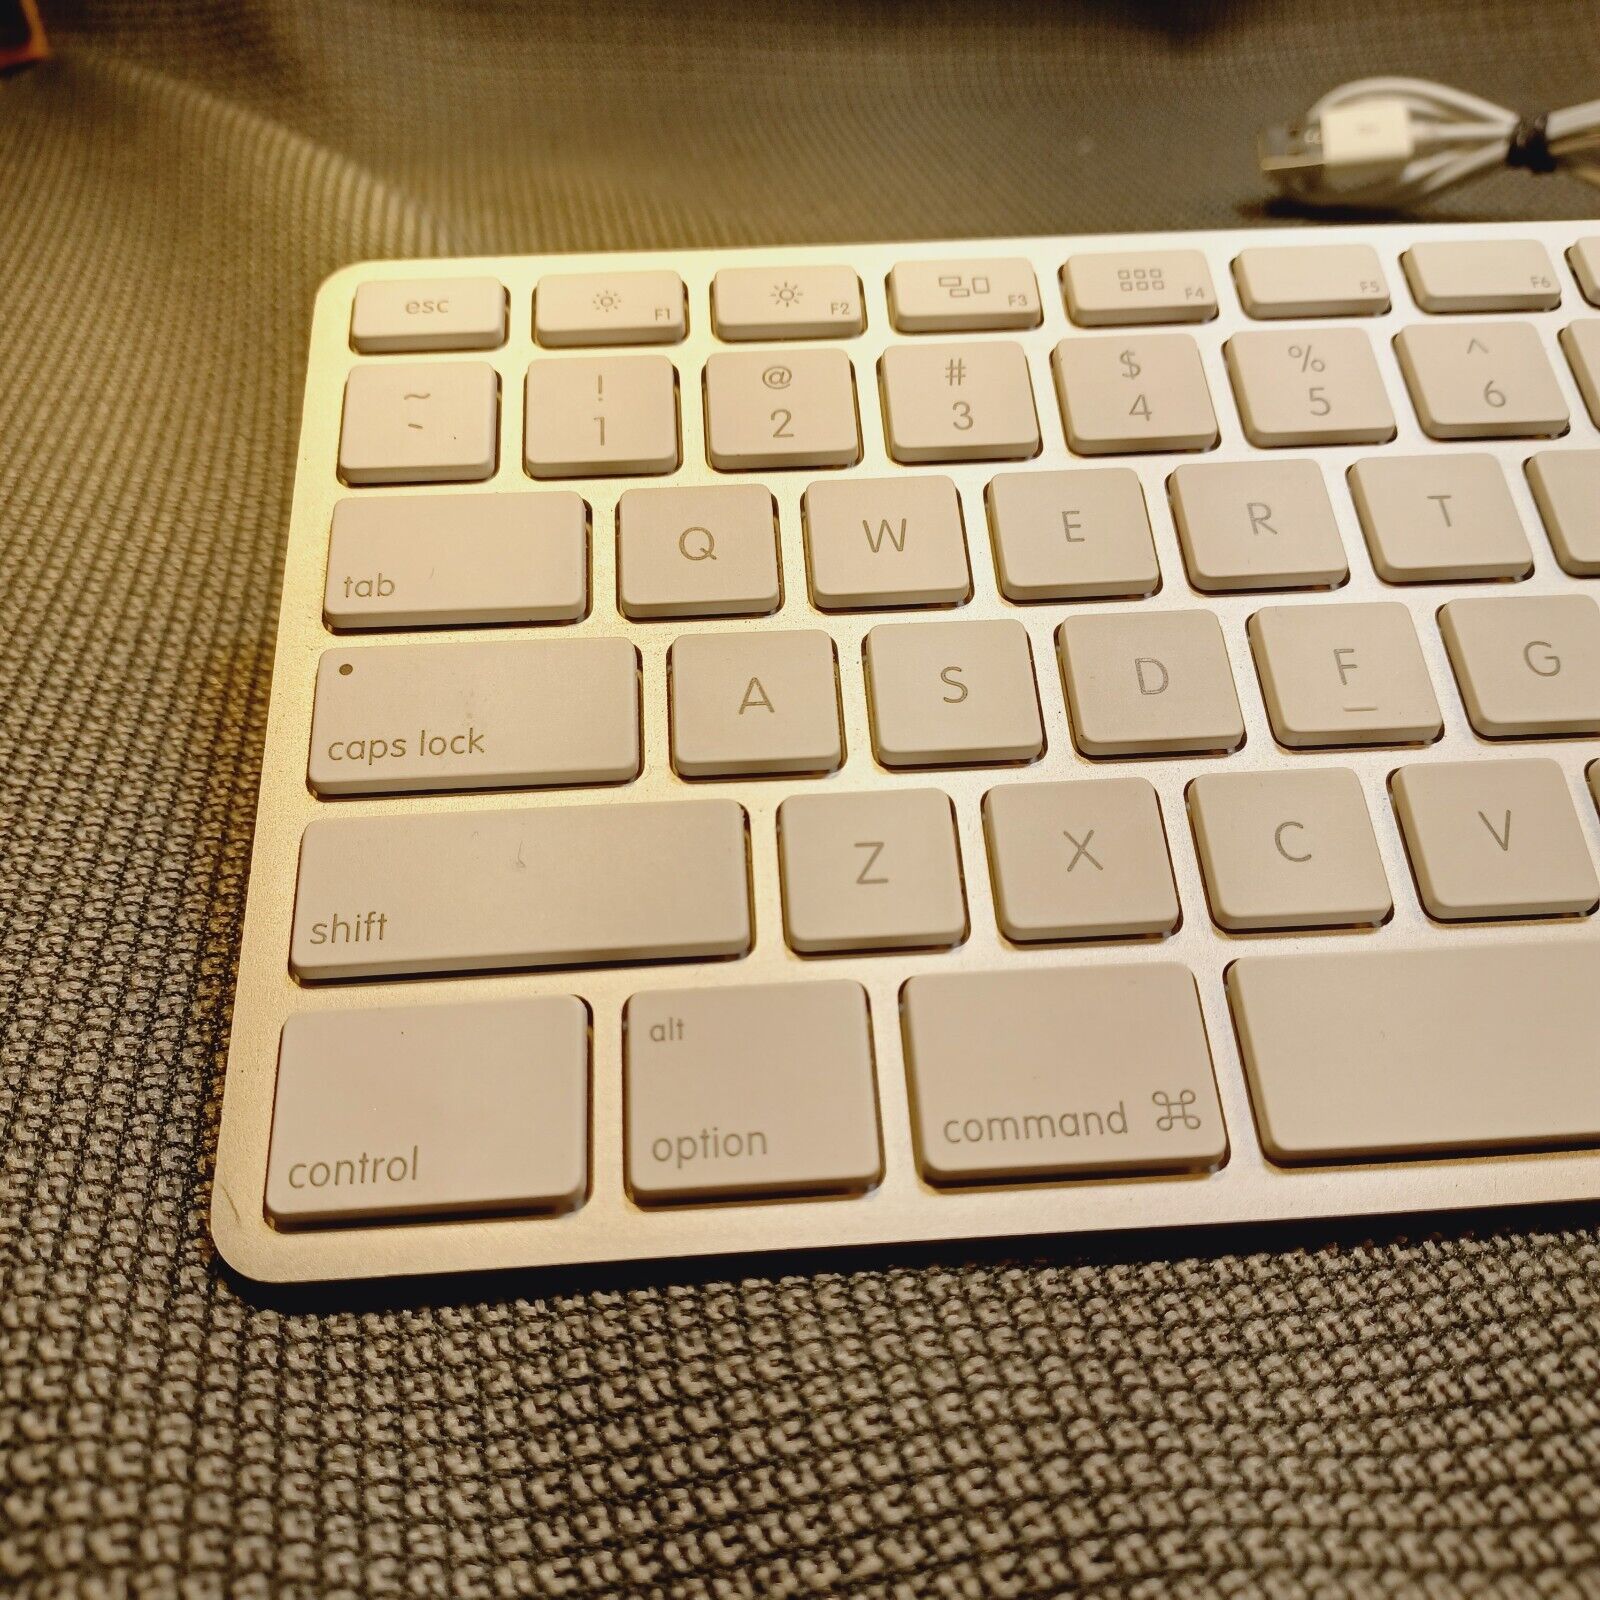 A1243 APPLE - Wired USB Keyboard w/Numeric Keypad for iMac, Mac Mini, Pro,